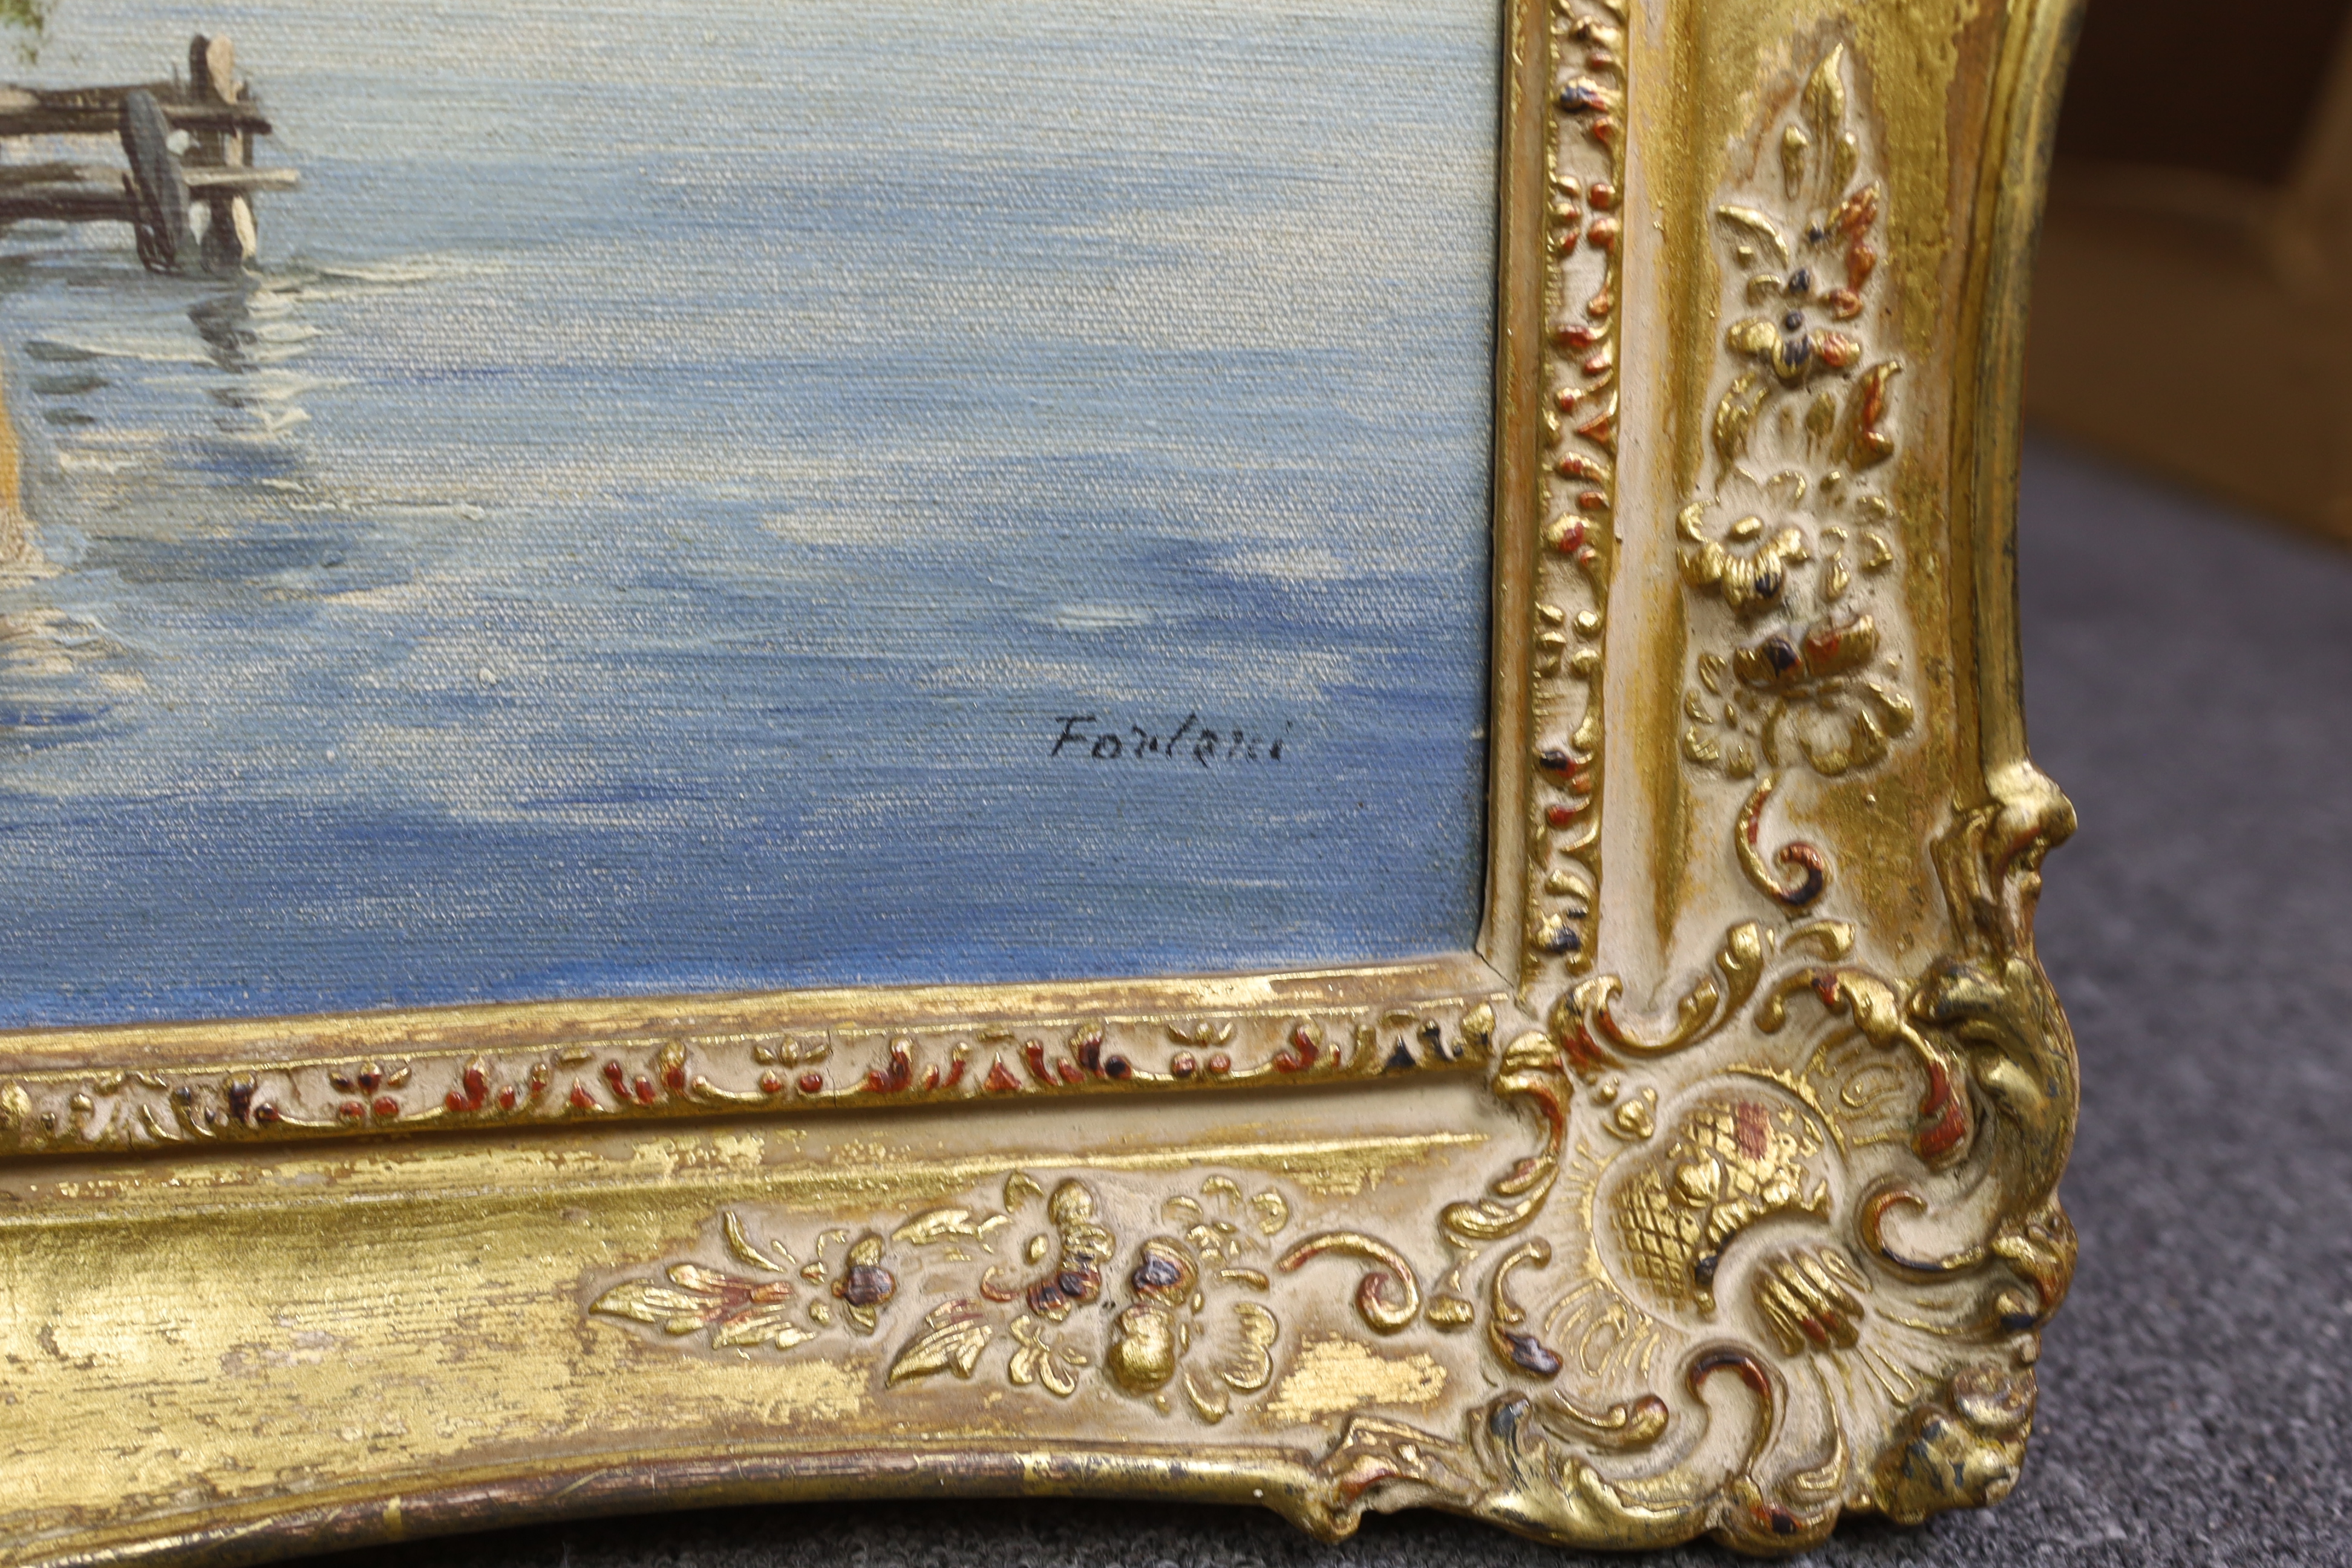 Fontana (Italian School), 'Lake Lugano, Gandria', oil on canvas, 50 x 60cm